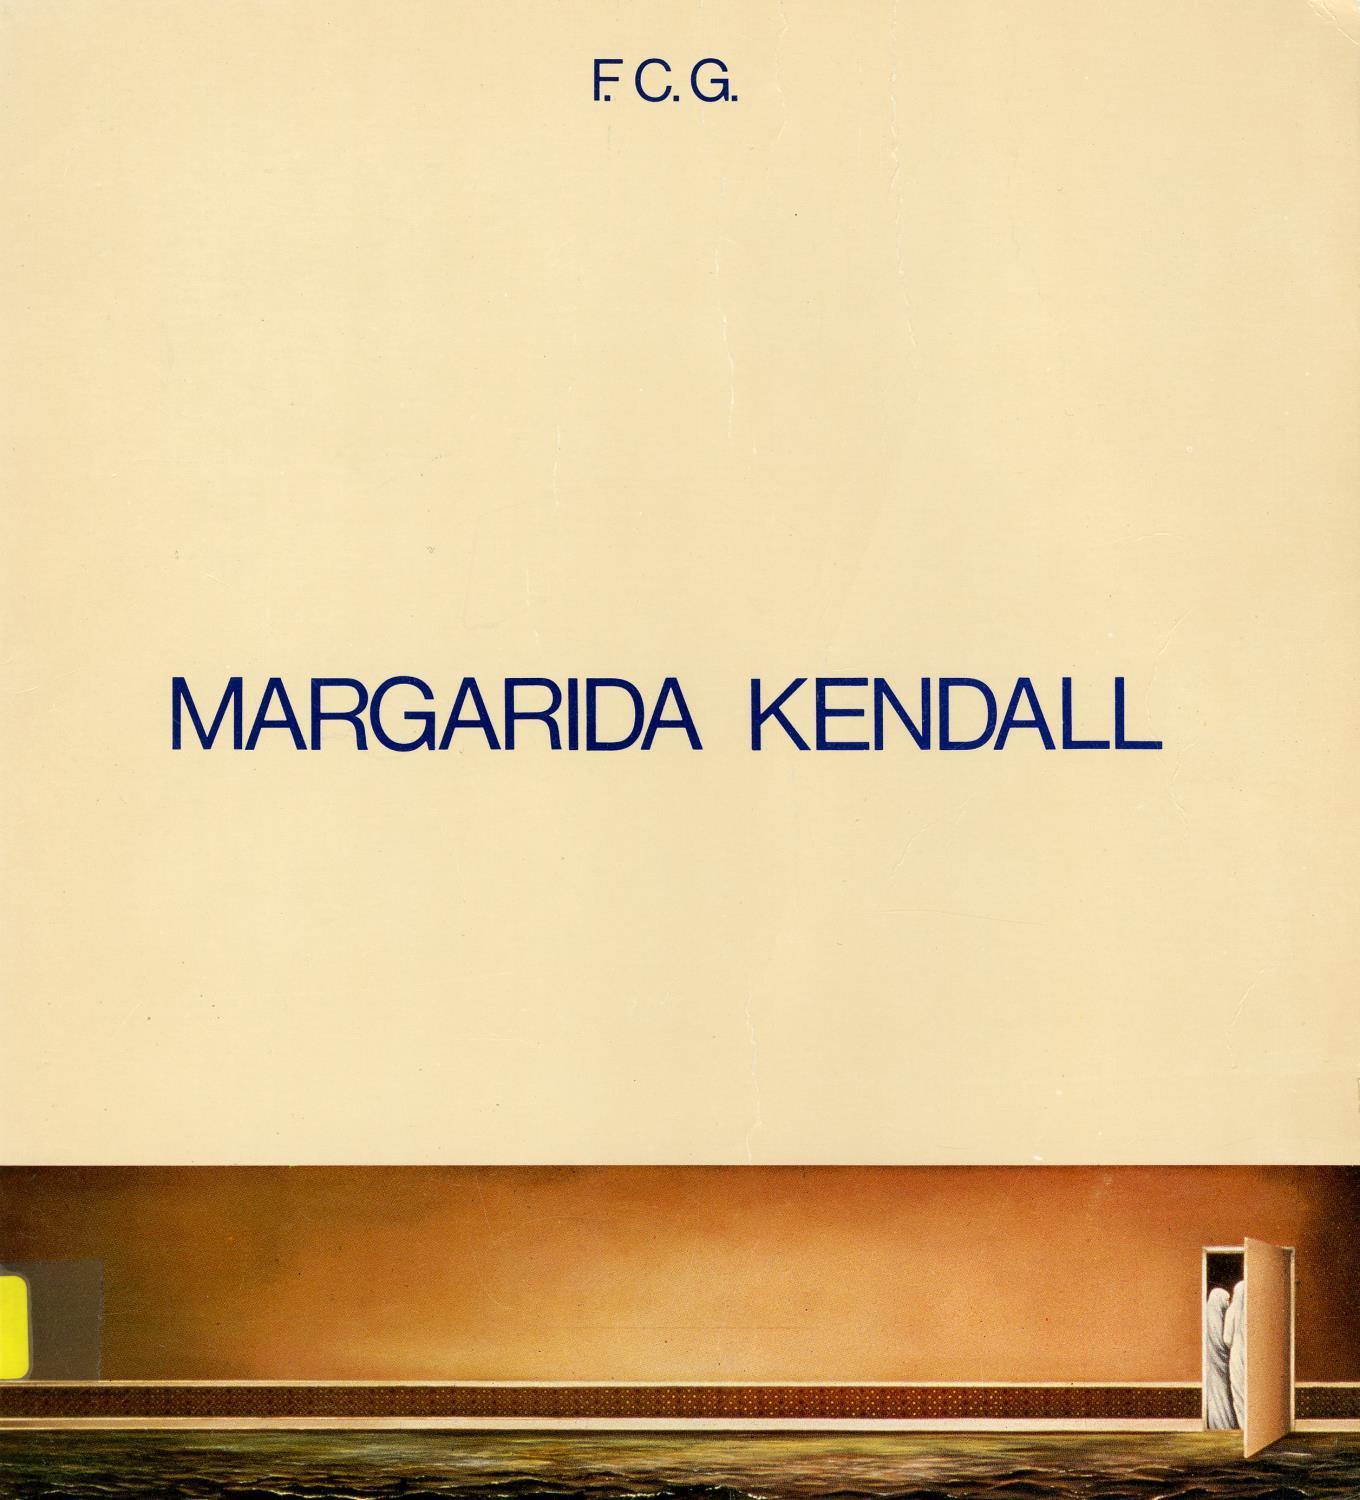 Margarida Kendall